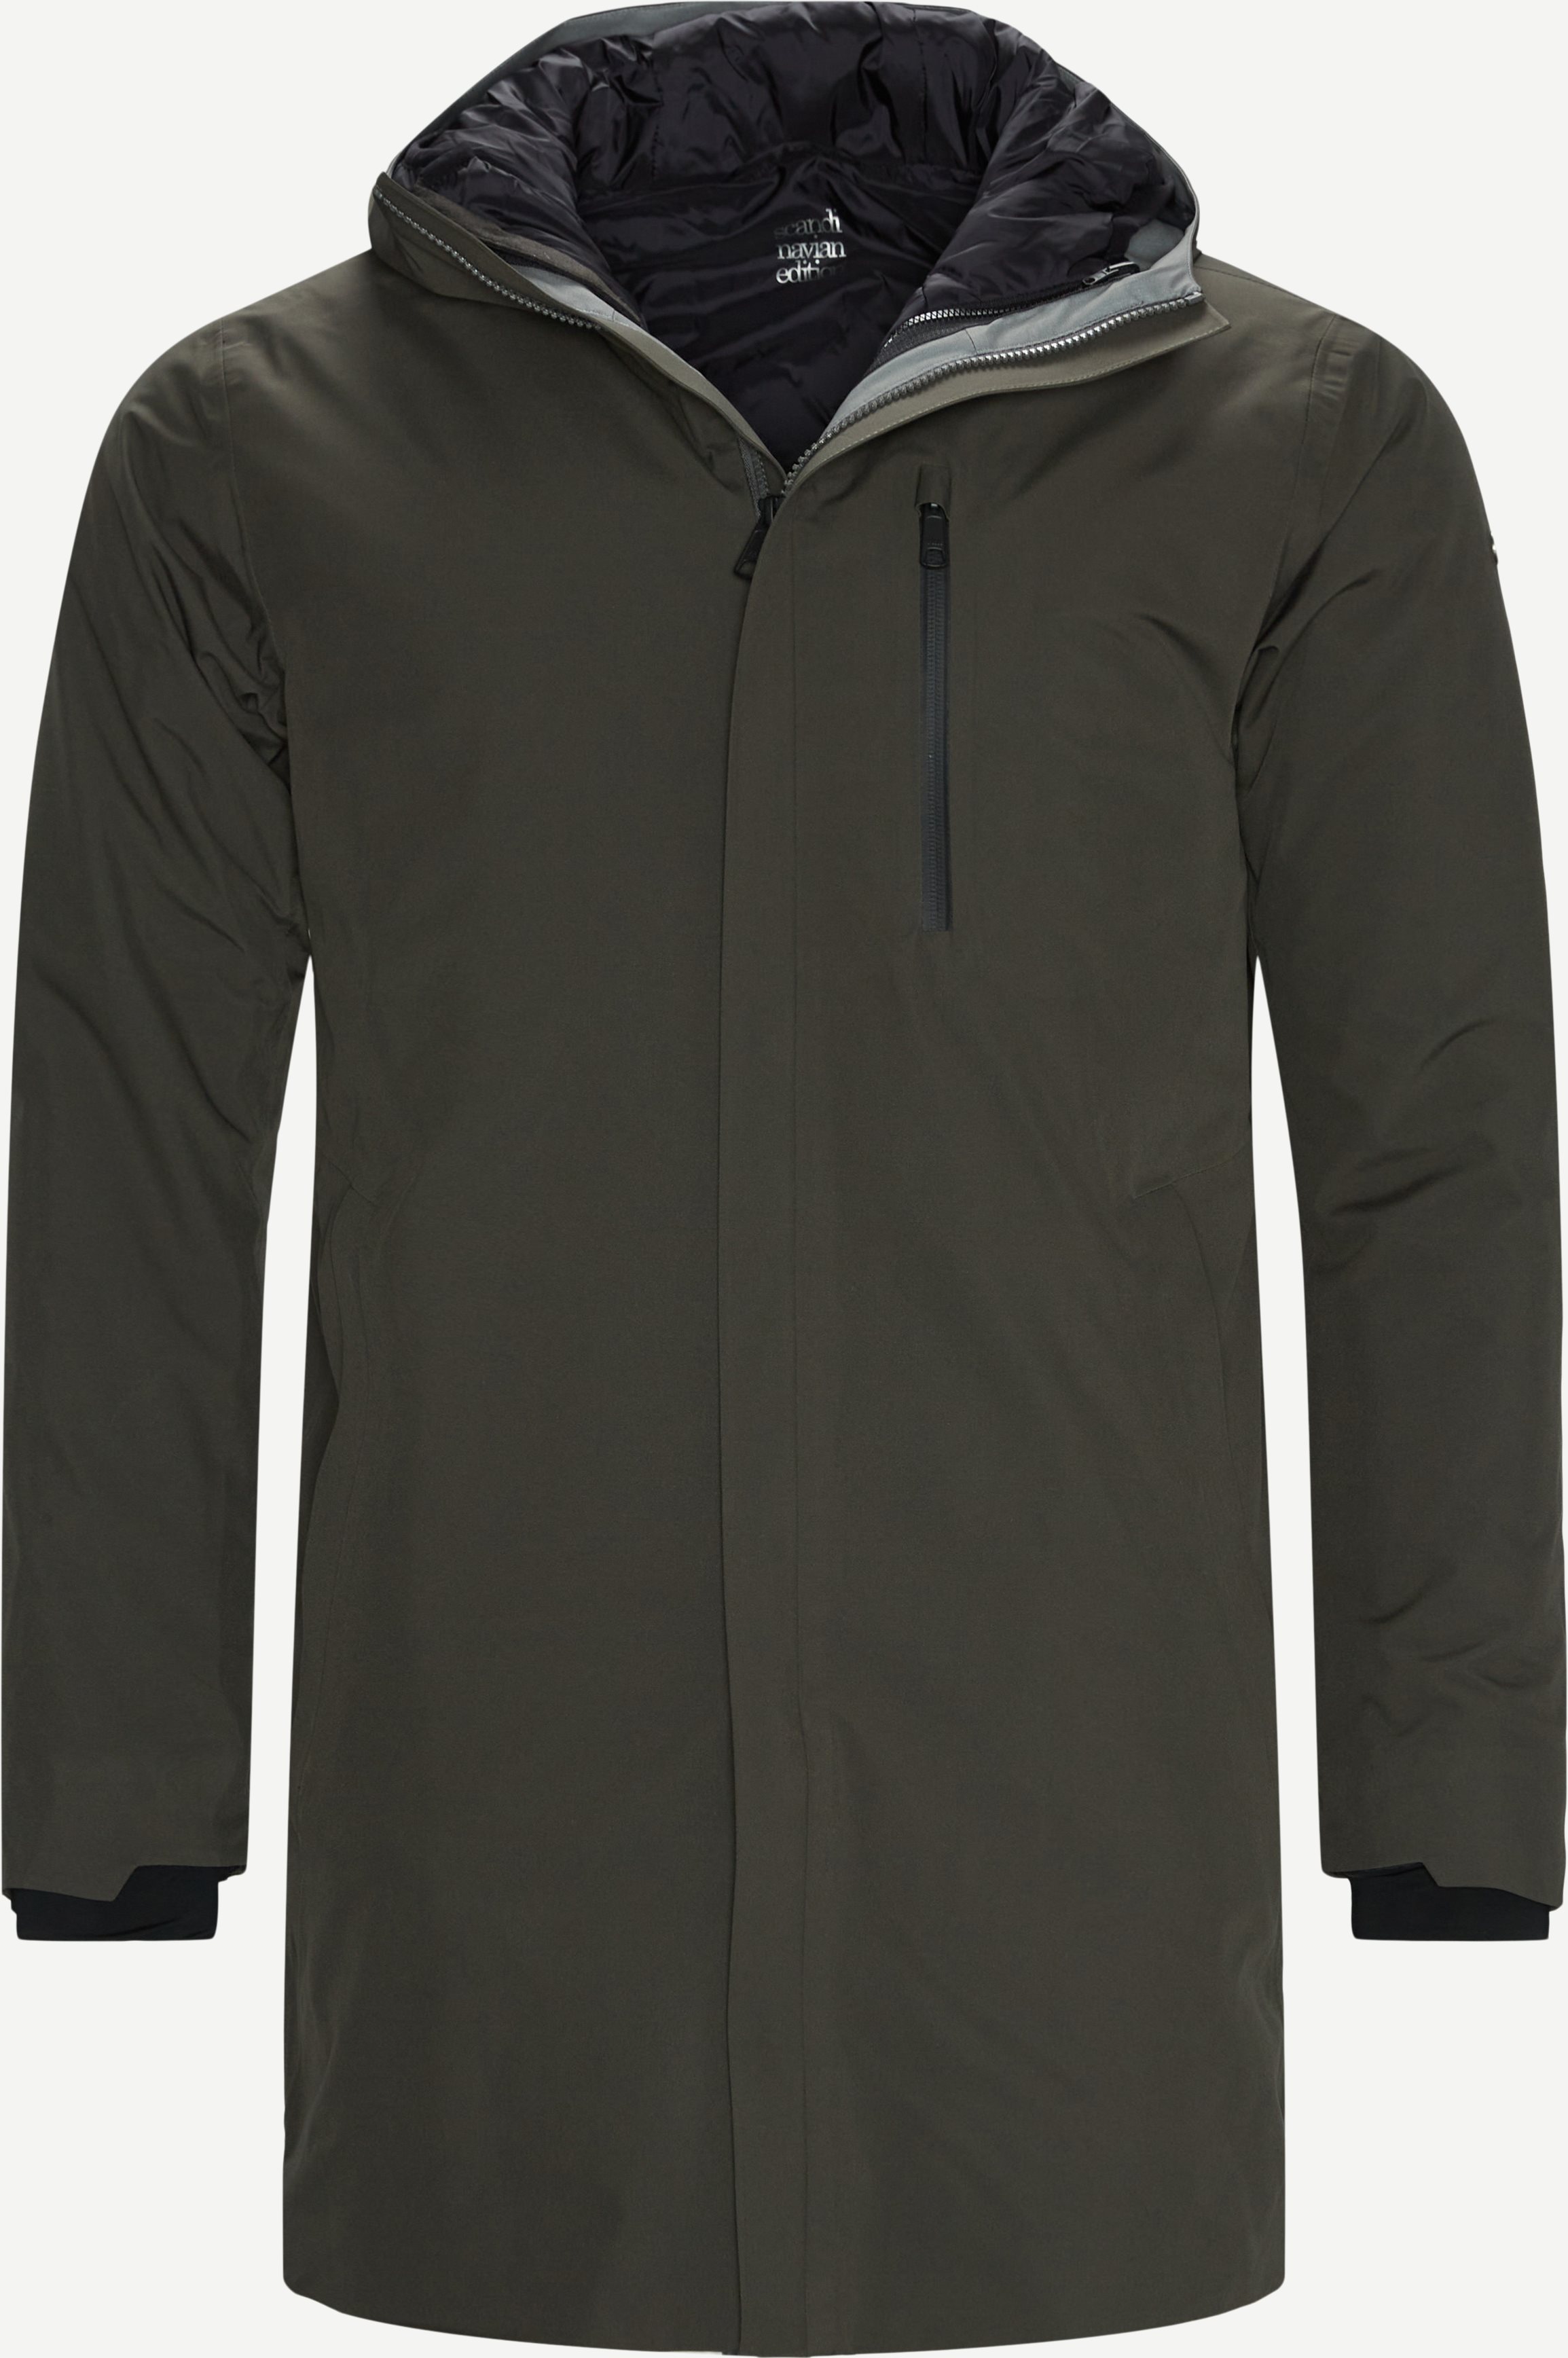 Urban Winter Jacket - Jackets - Regular fit - Army